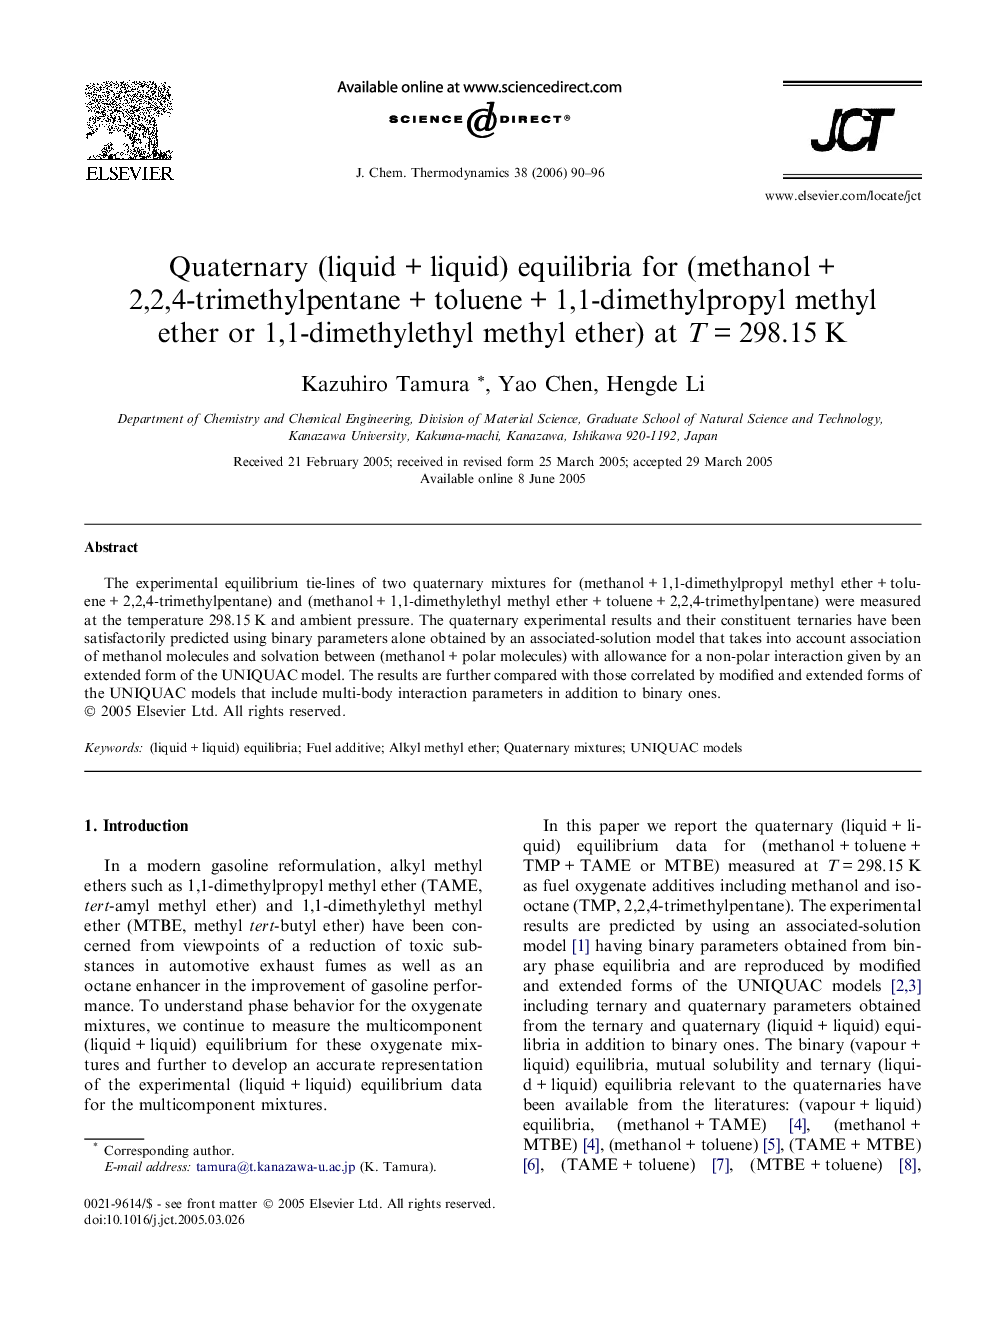 Quaternary (liquid + liquid) equilibria for (methanol + 2,2,4-trimethylpentane + toluene + 1,1-dimethylpropyl methyl ether or 1,1-dimethylethyl methyl ether) at T = 298.15 K